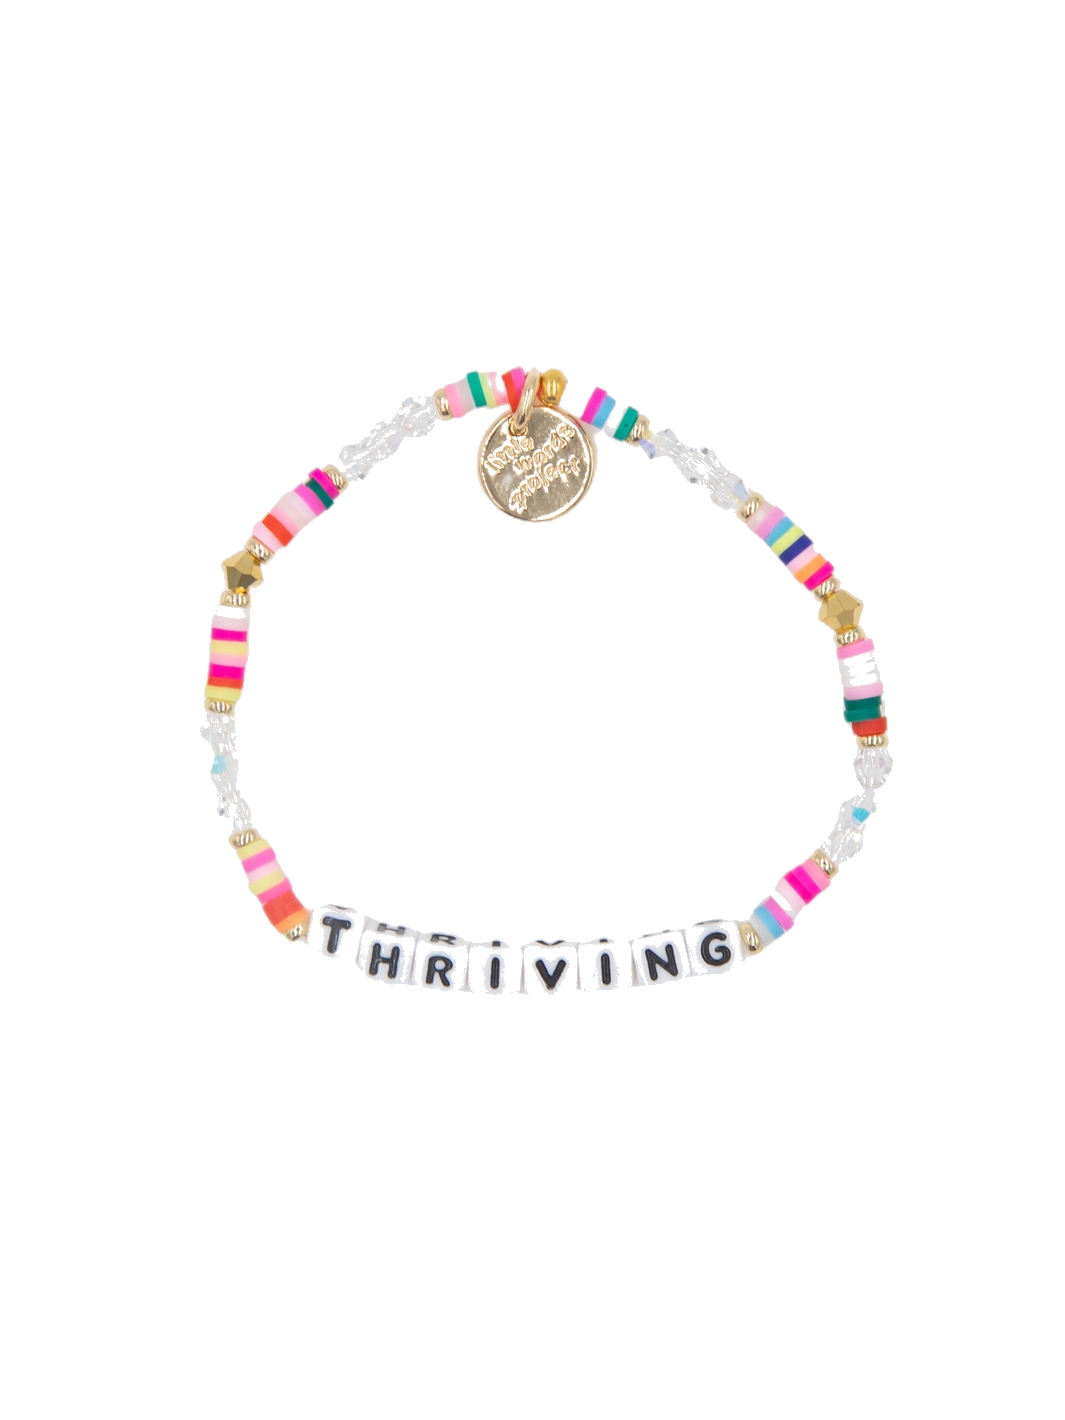 little-words-project-thriving-bracelet-rainbow - Shaina Rosenthal.jpg